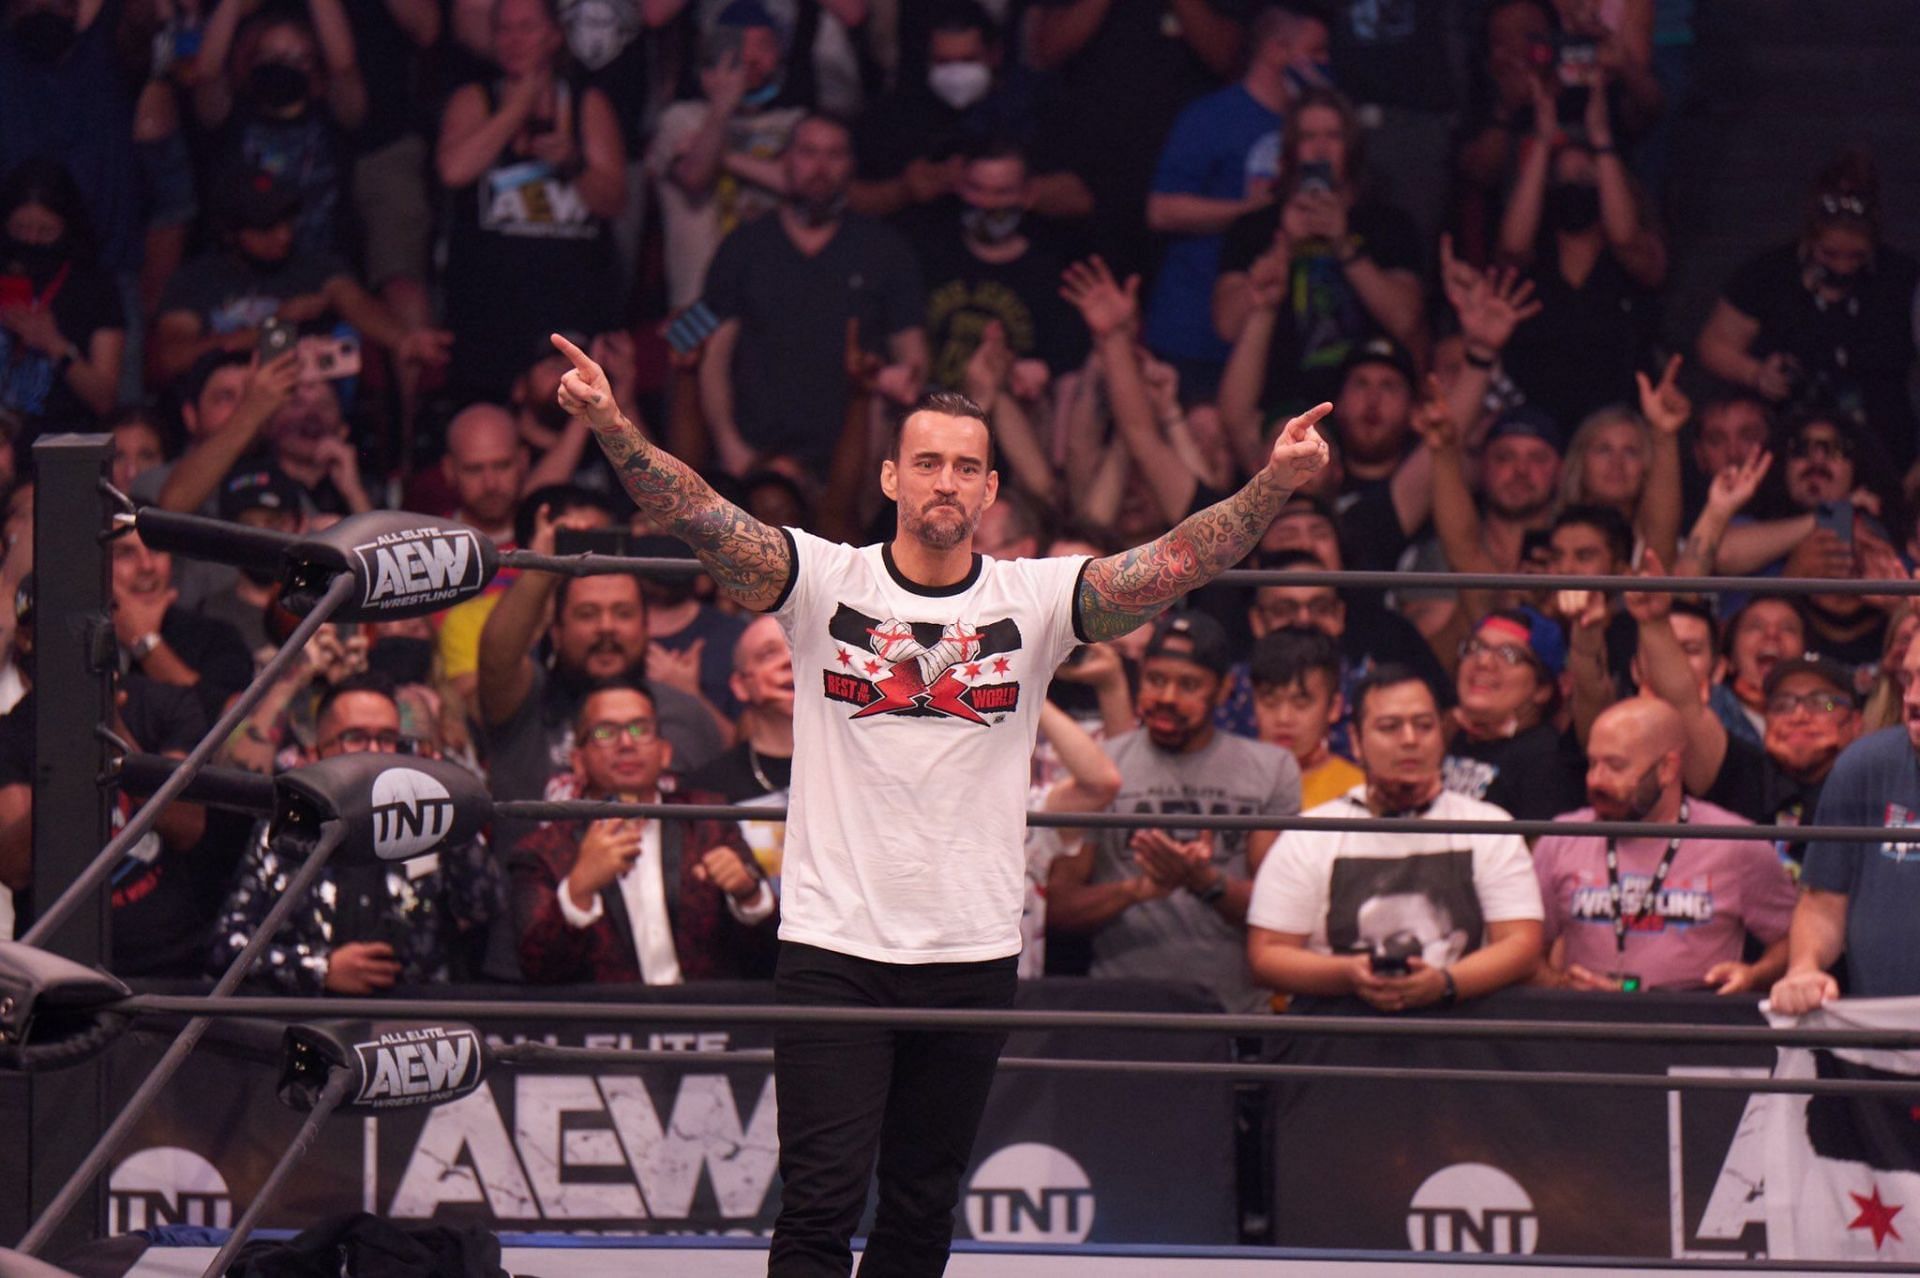 CM Punk is a former WWE Champion!